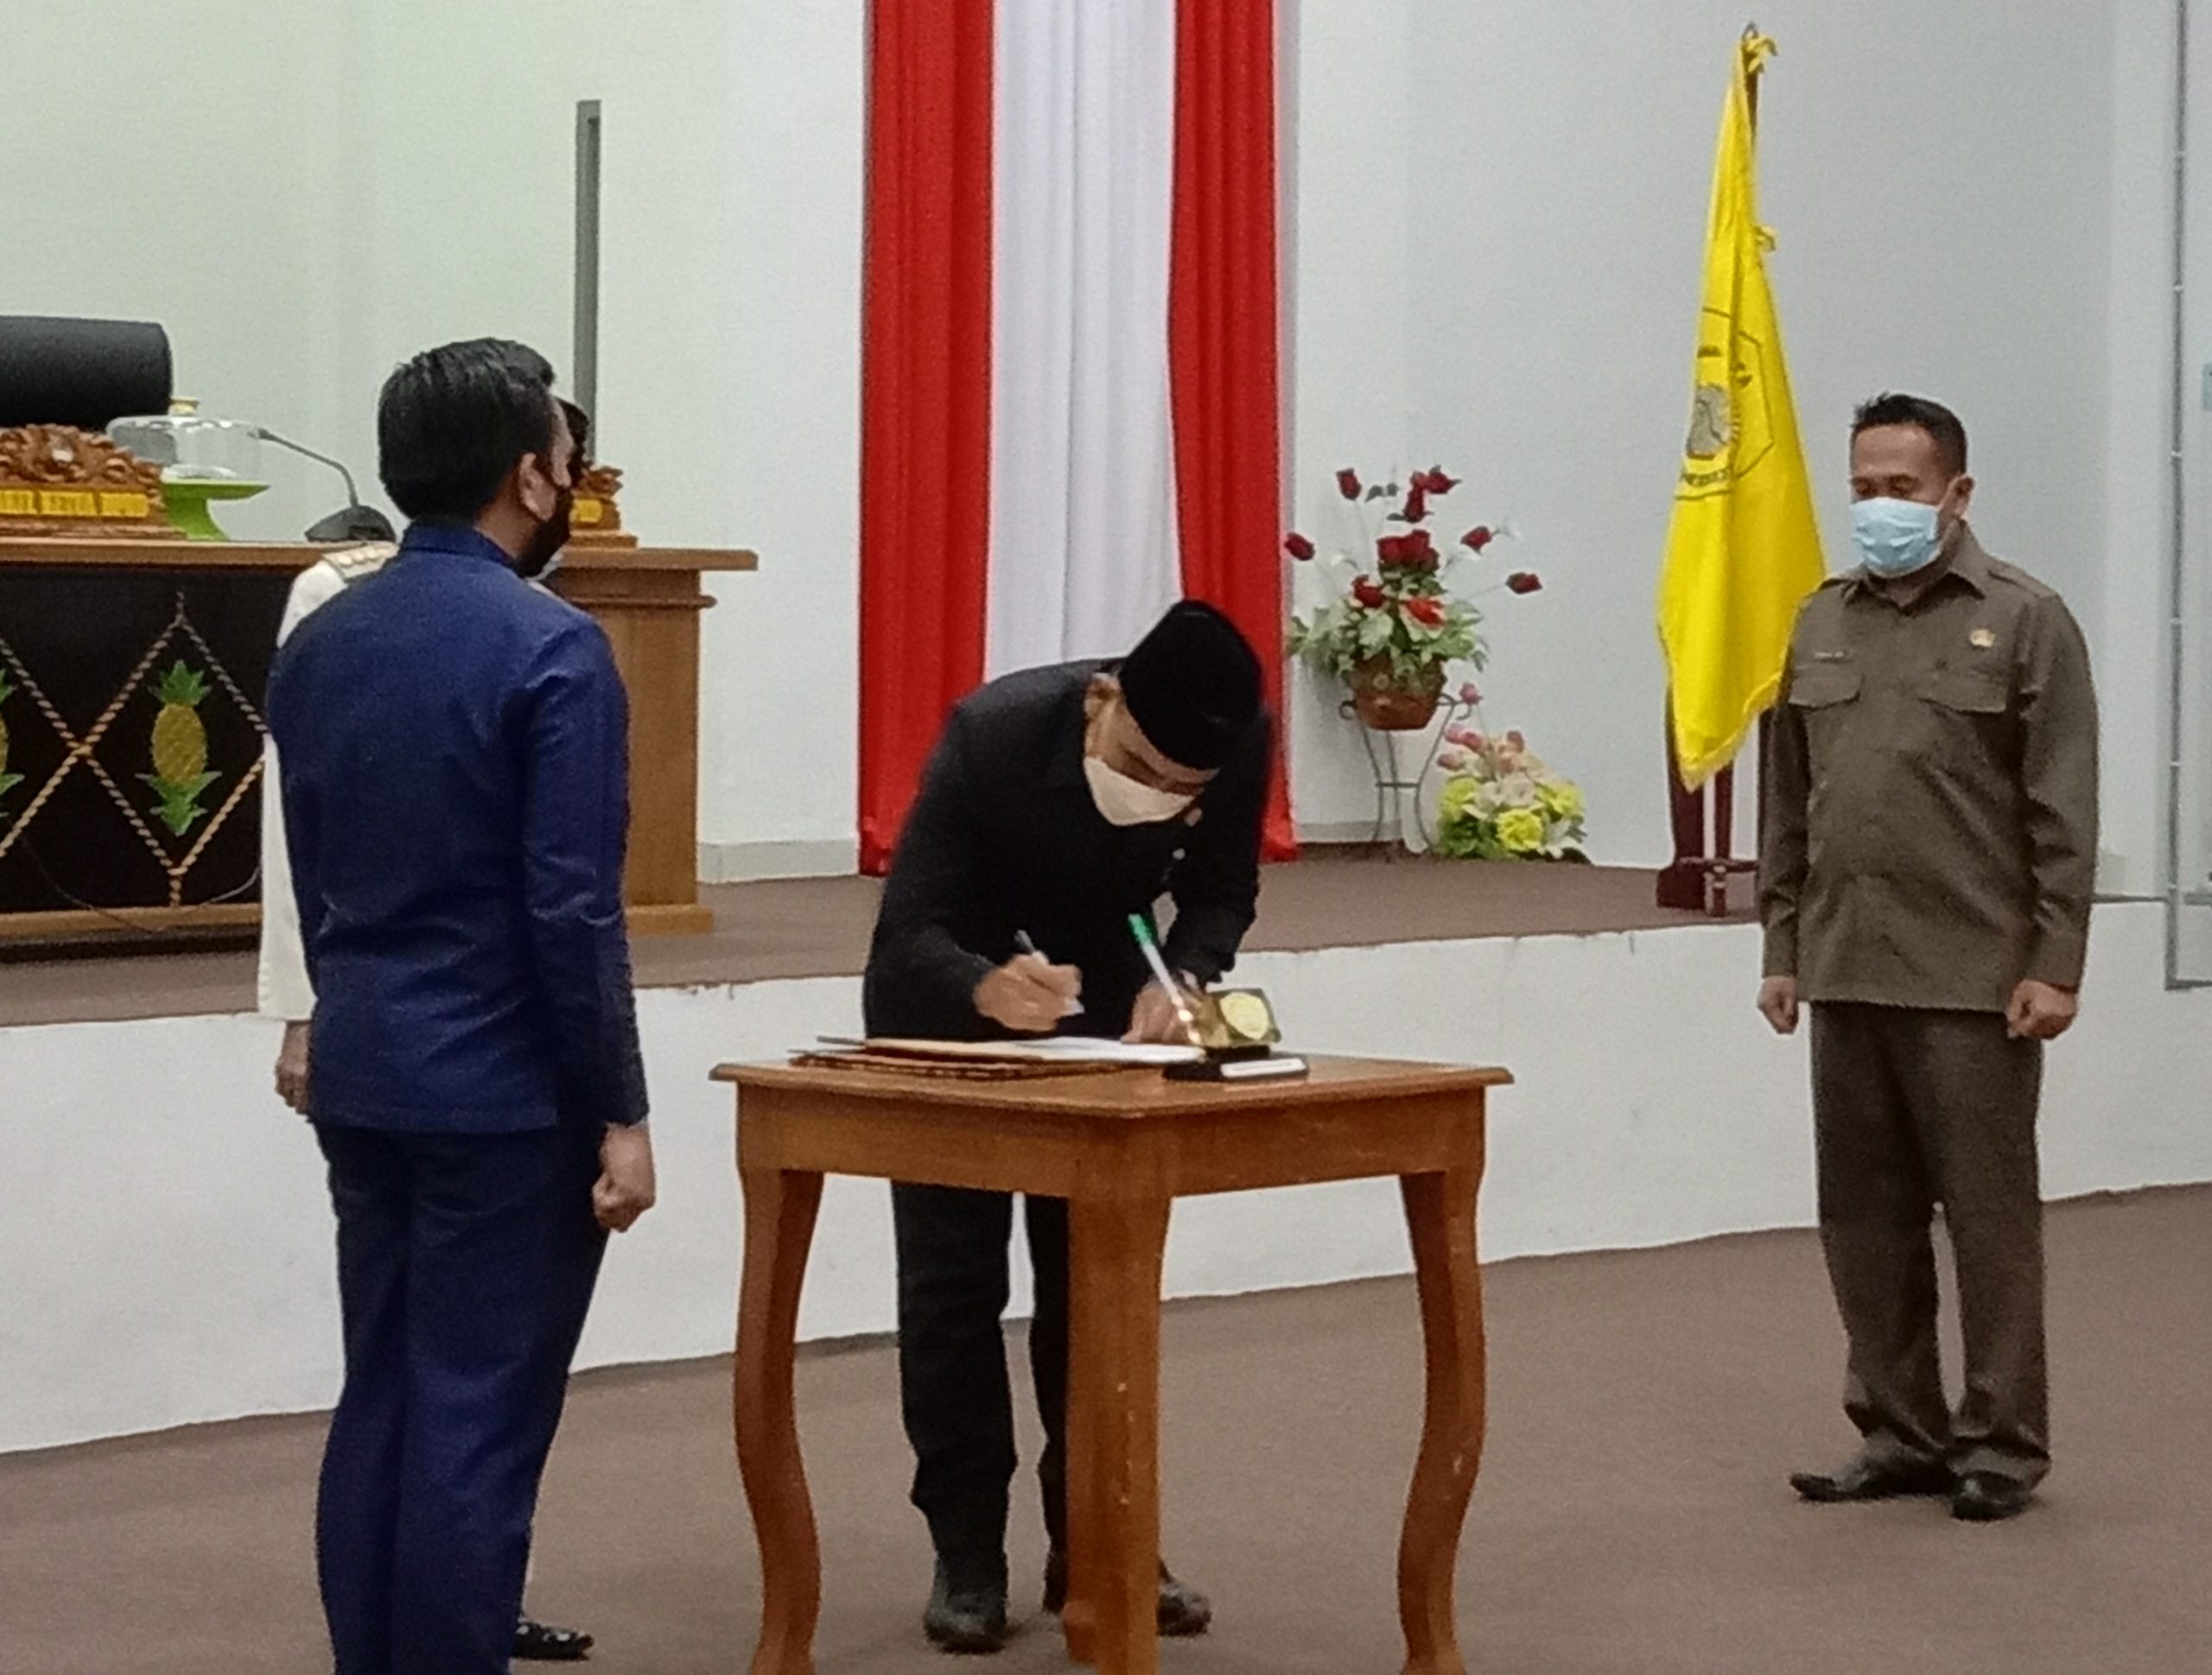 Ketua DPRD Baubau menandatangani surat persetujuan bersama RPJMD Kota Baubau. (Foto: Aisyah Welina/SULTRAKINI.COM)